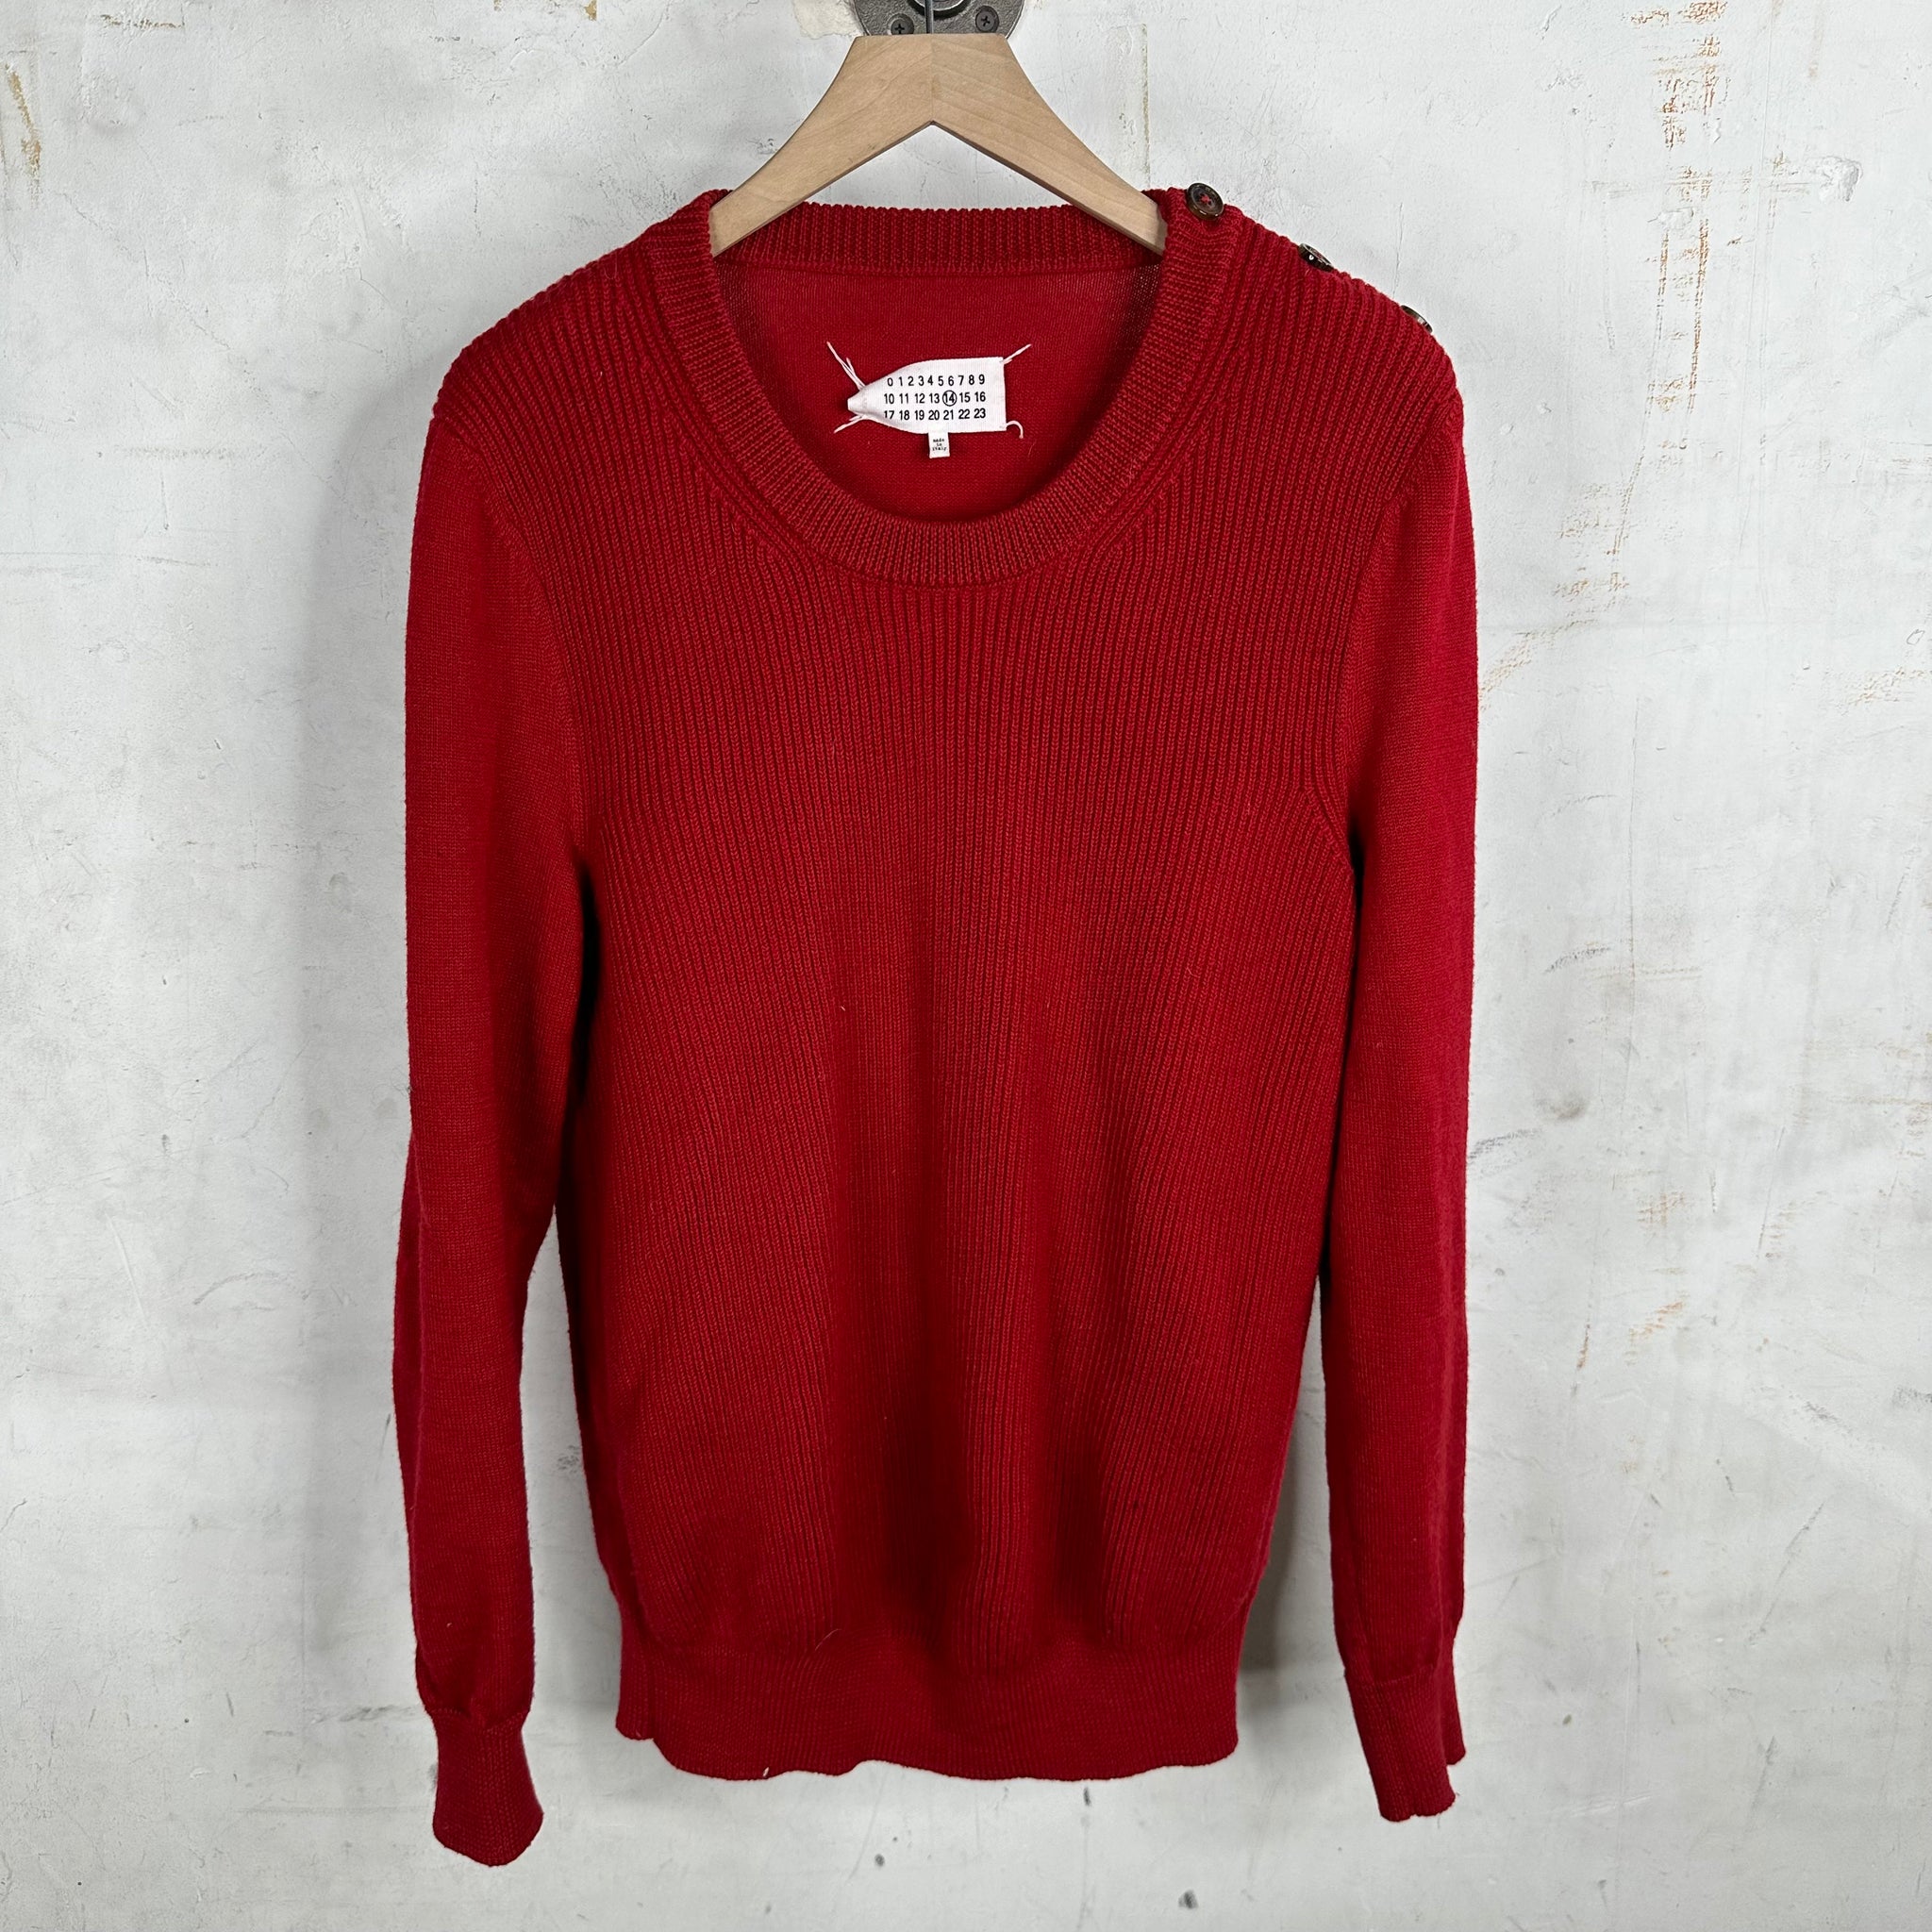 Margiela Red Knit Sweater